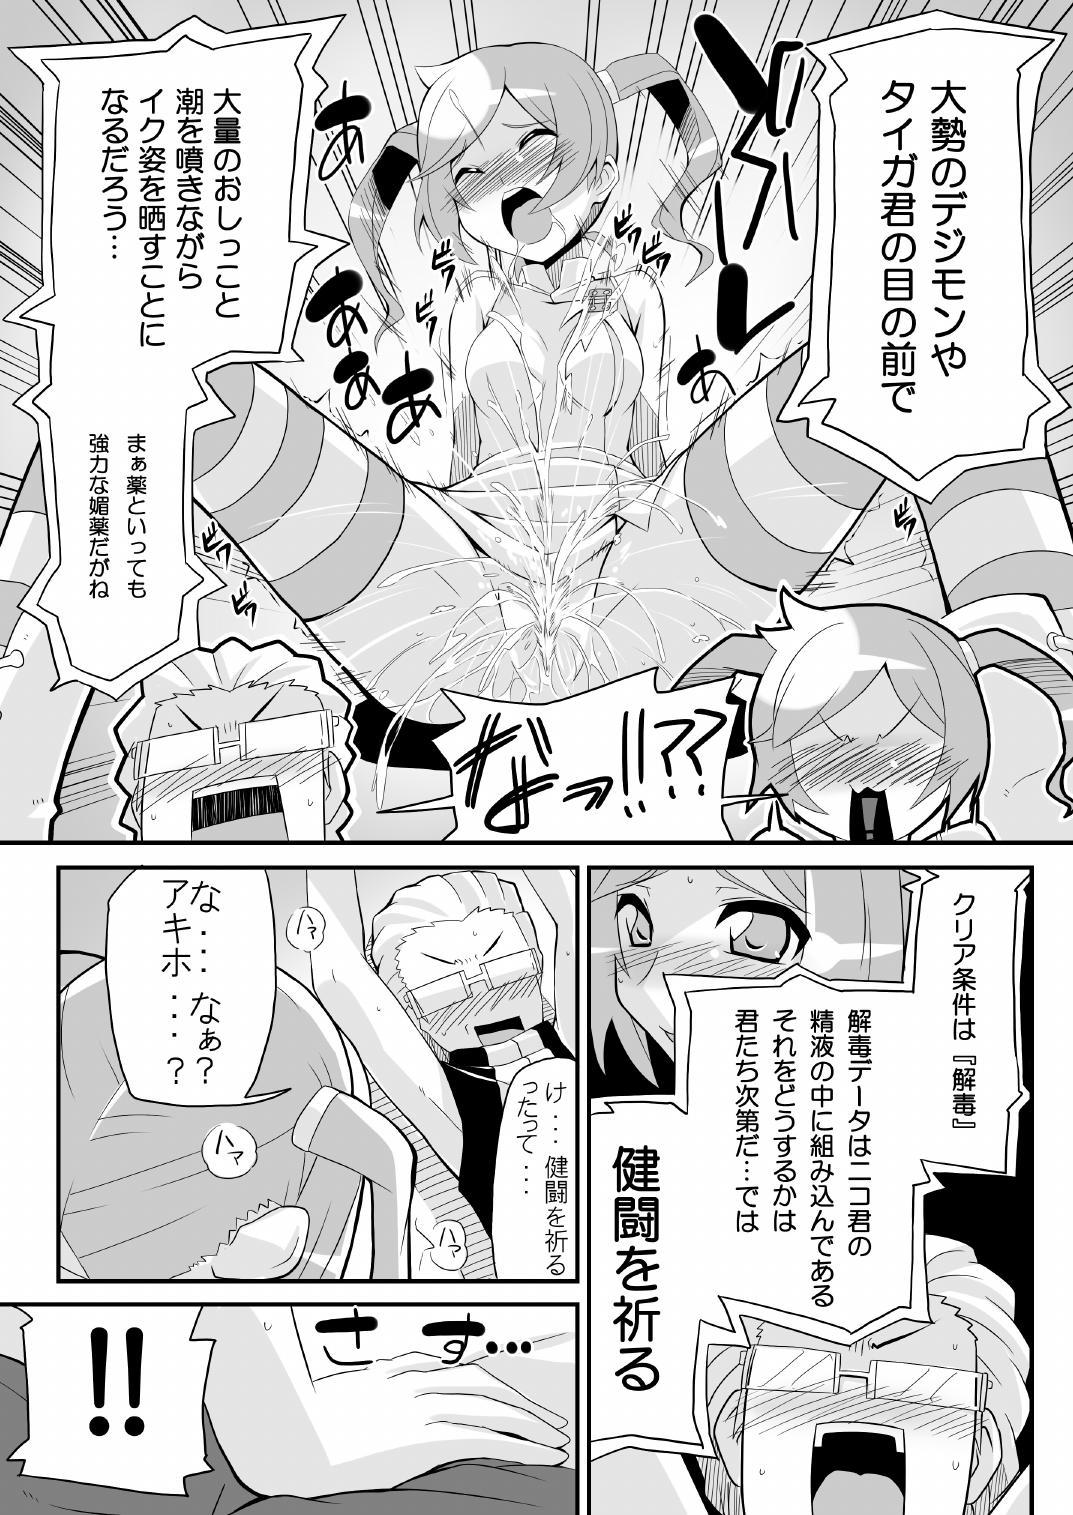 Leaked Re:Akiho/Rinatize Ero - Digimon Verified Profile - Page 5